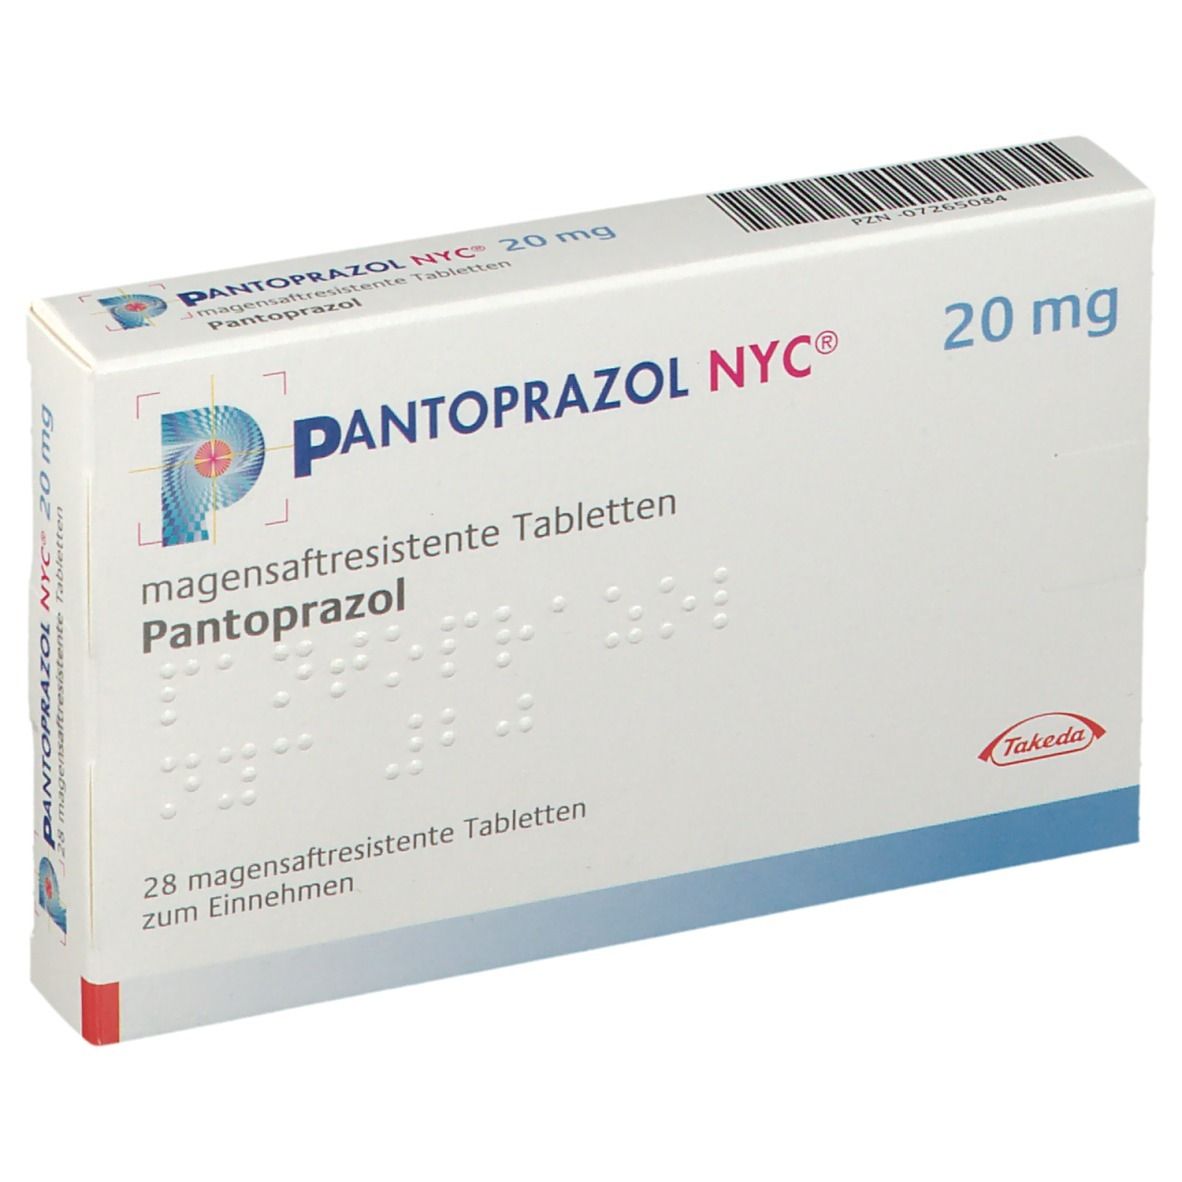 Pantoprazol NYC® 20 mg